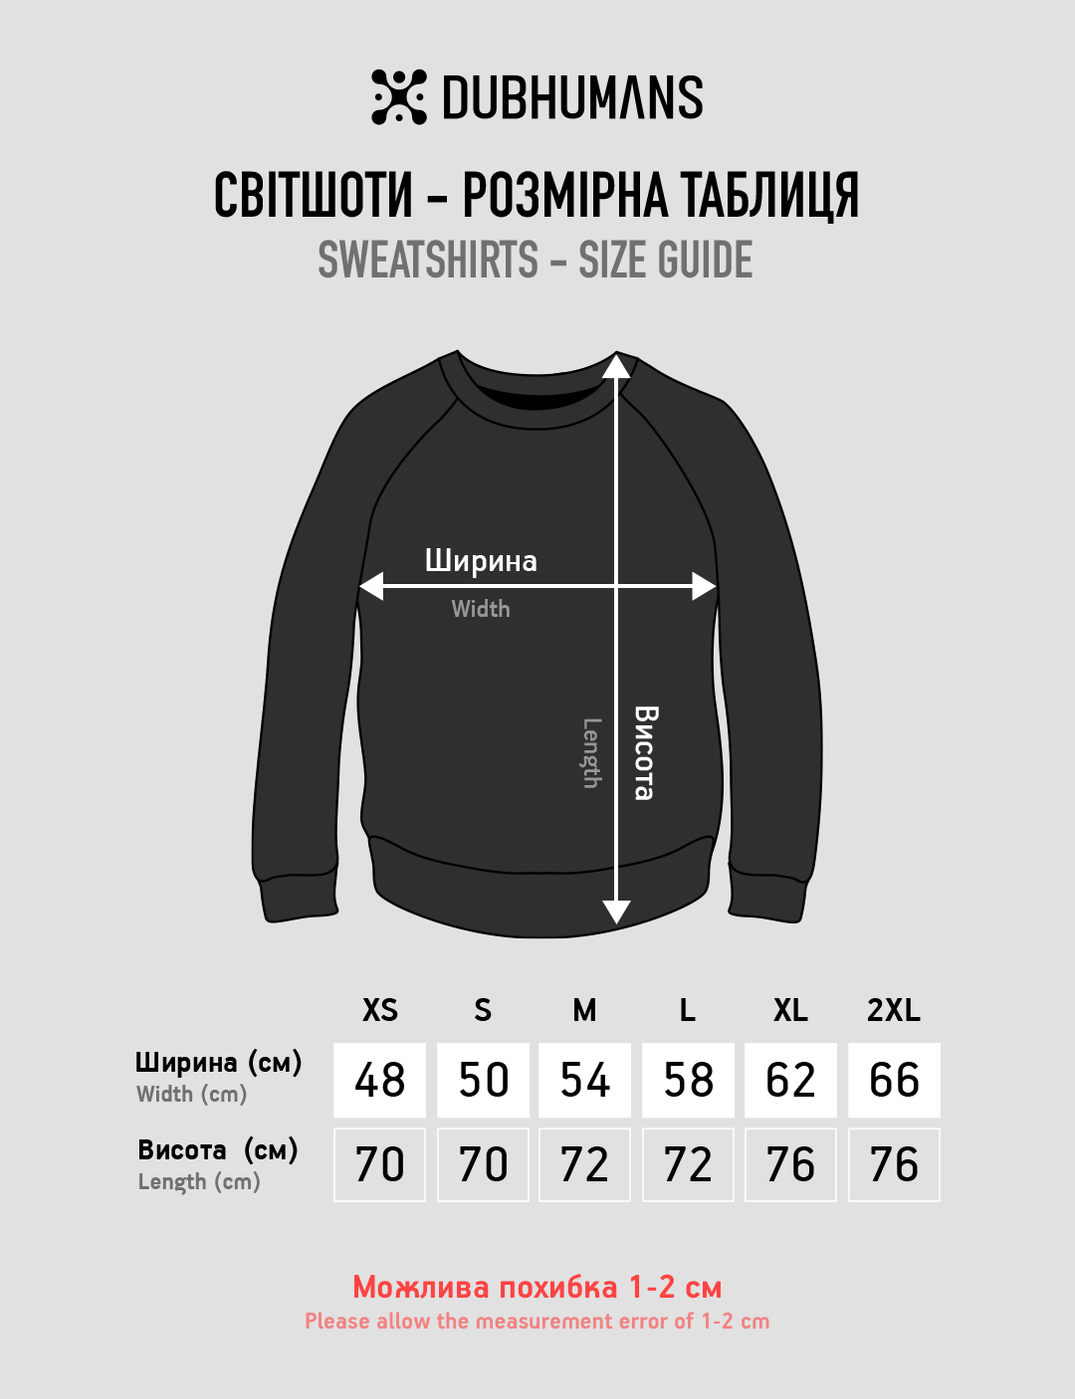 Men's Sweatshirt "Carpathian Blue Mountains", White, M